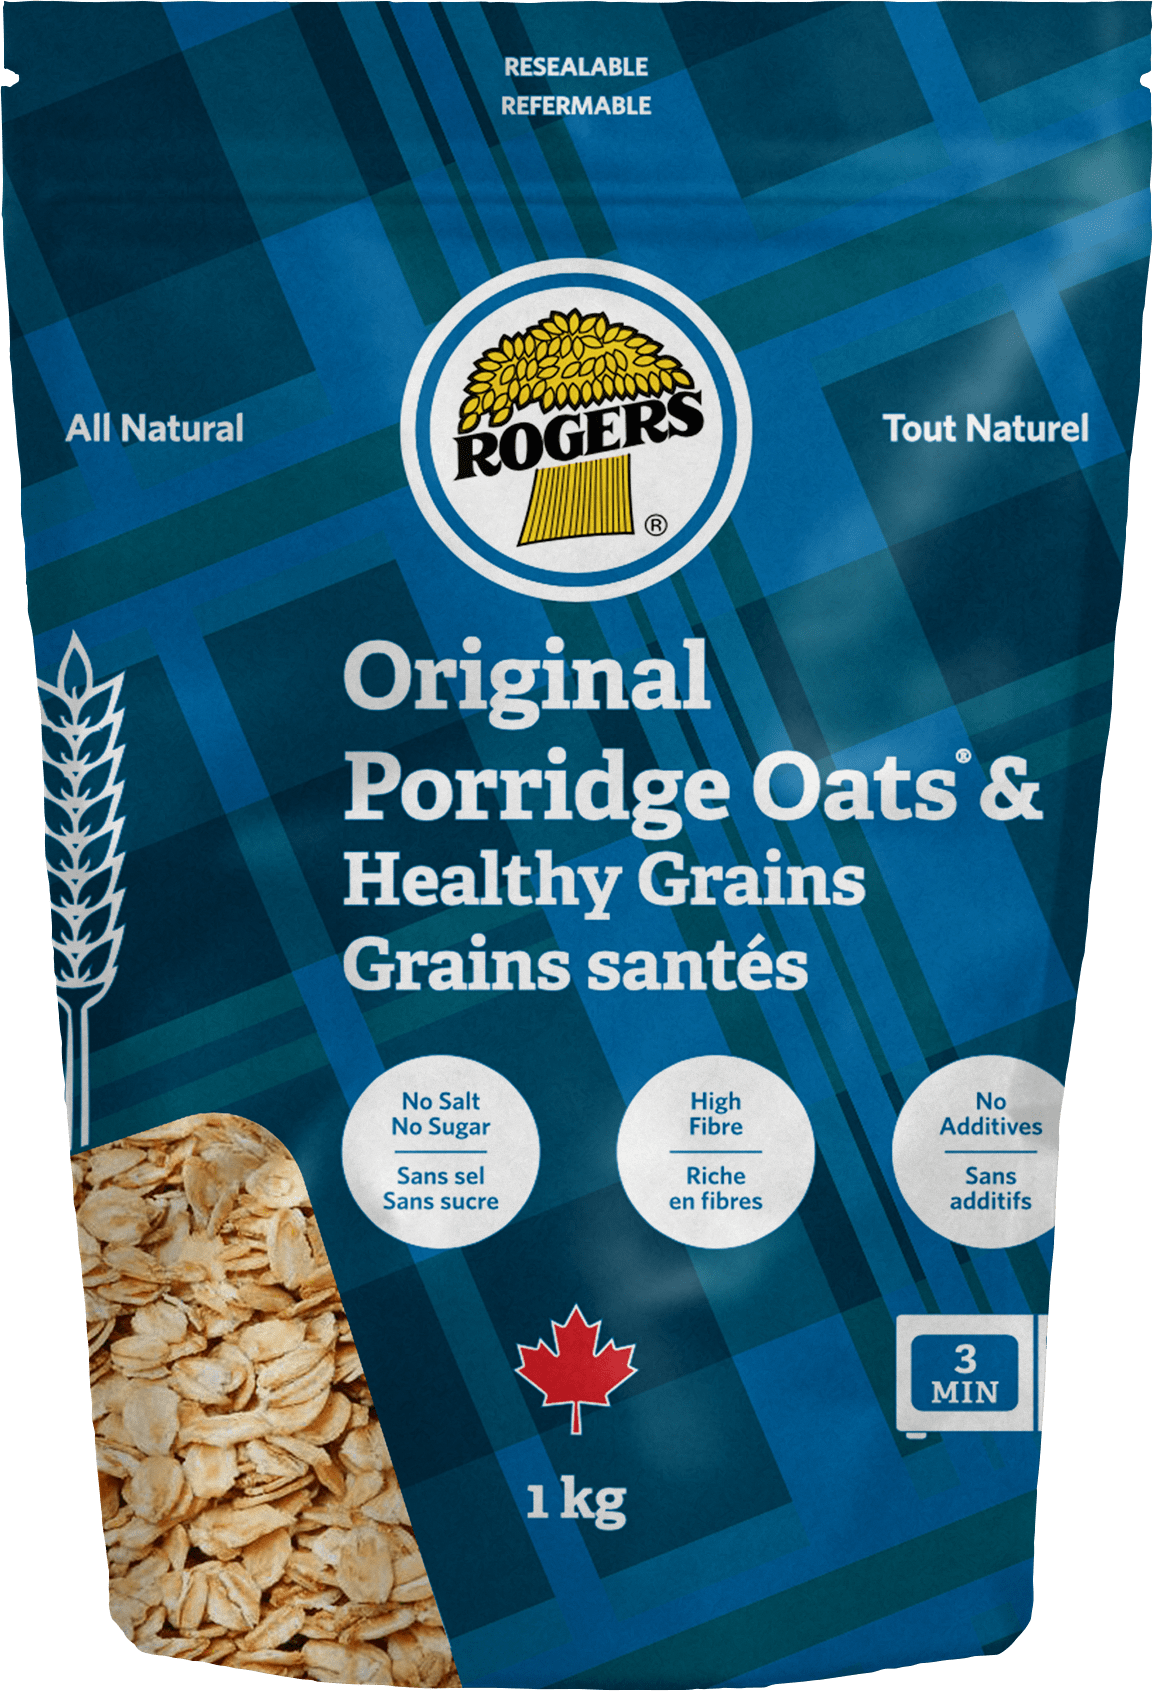 Rogers Original Porridge Oats Healthy Grains Package PNG